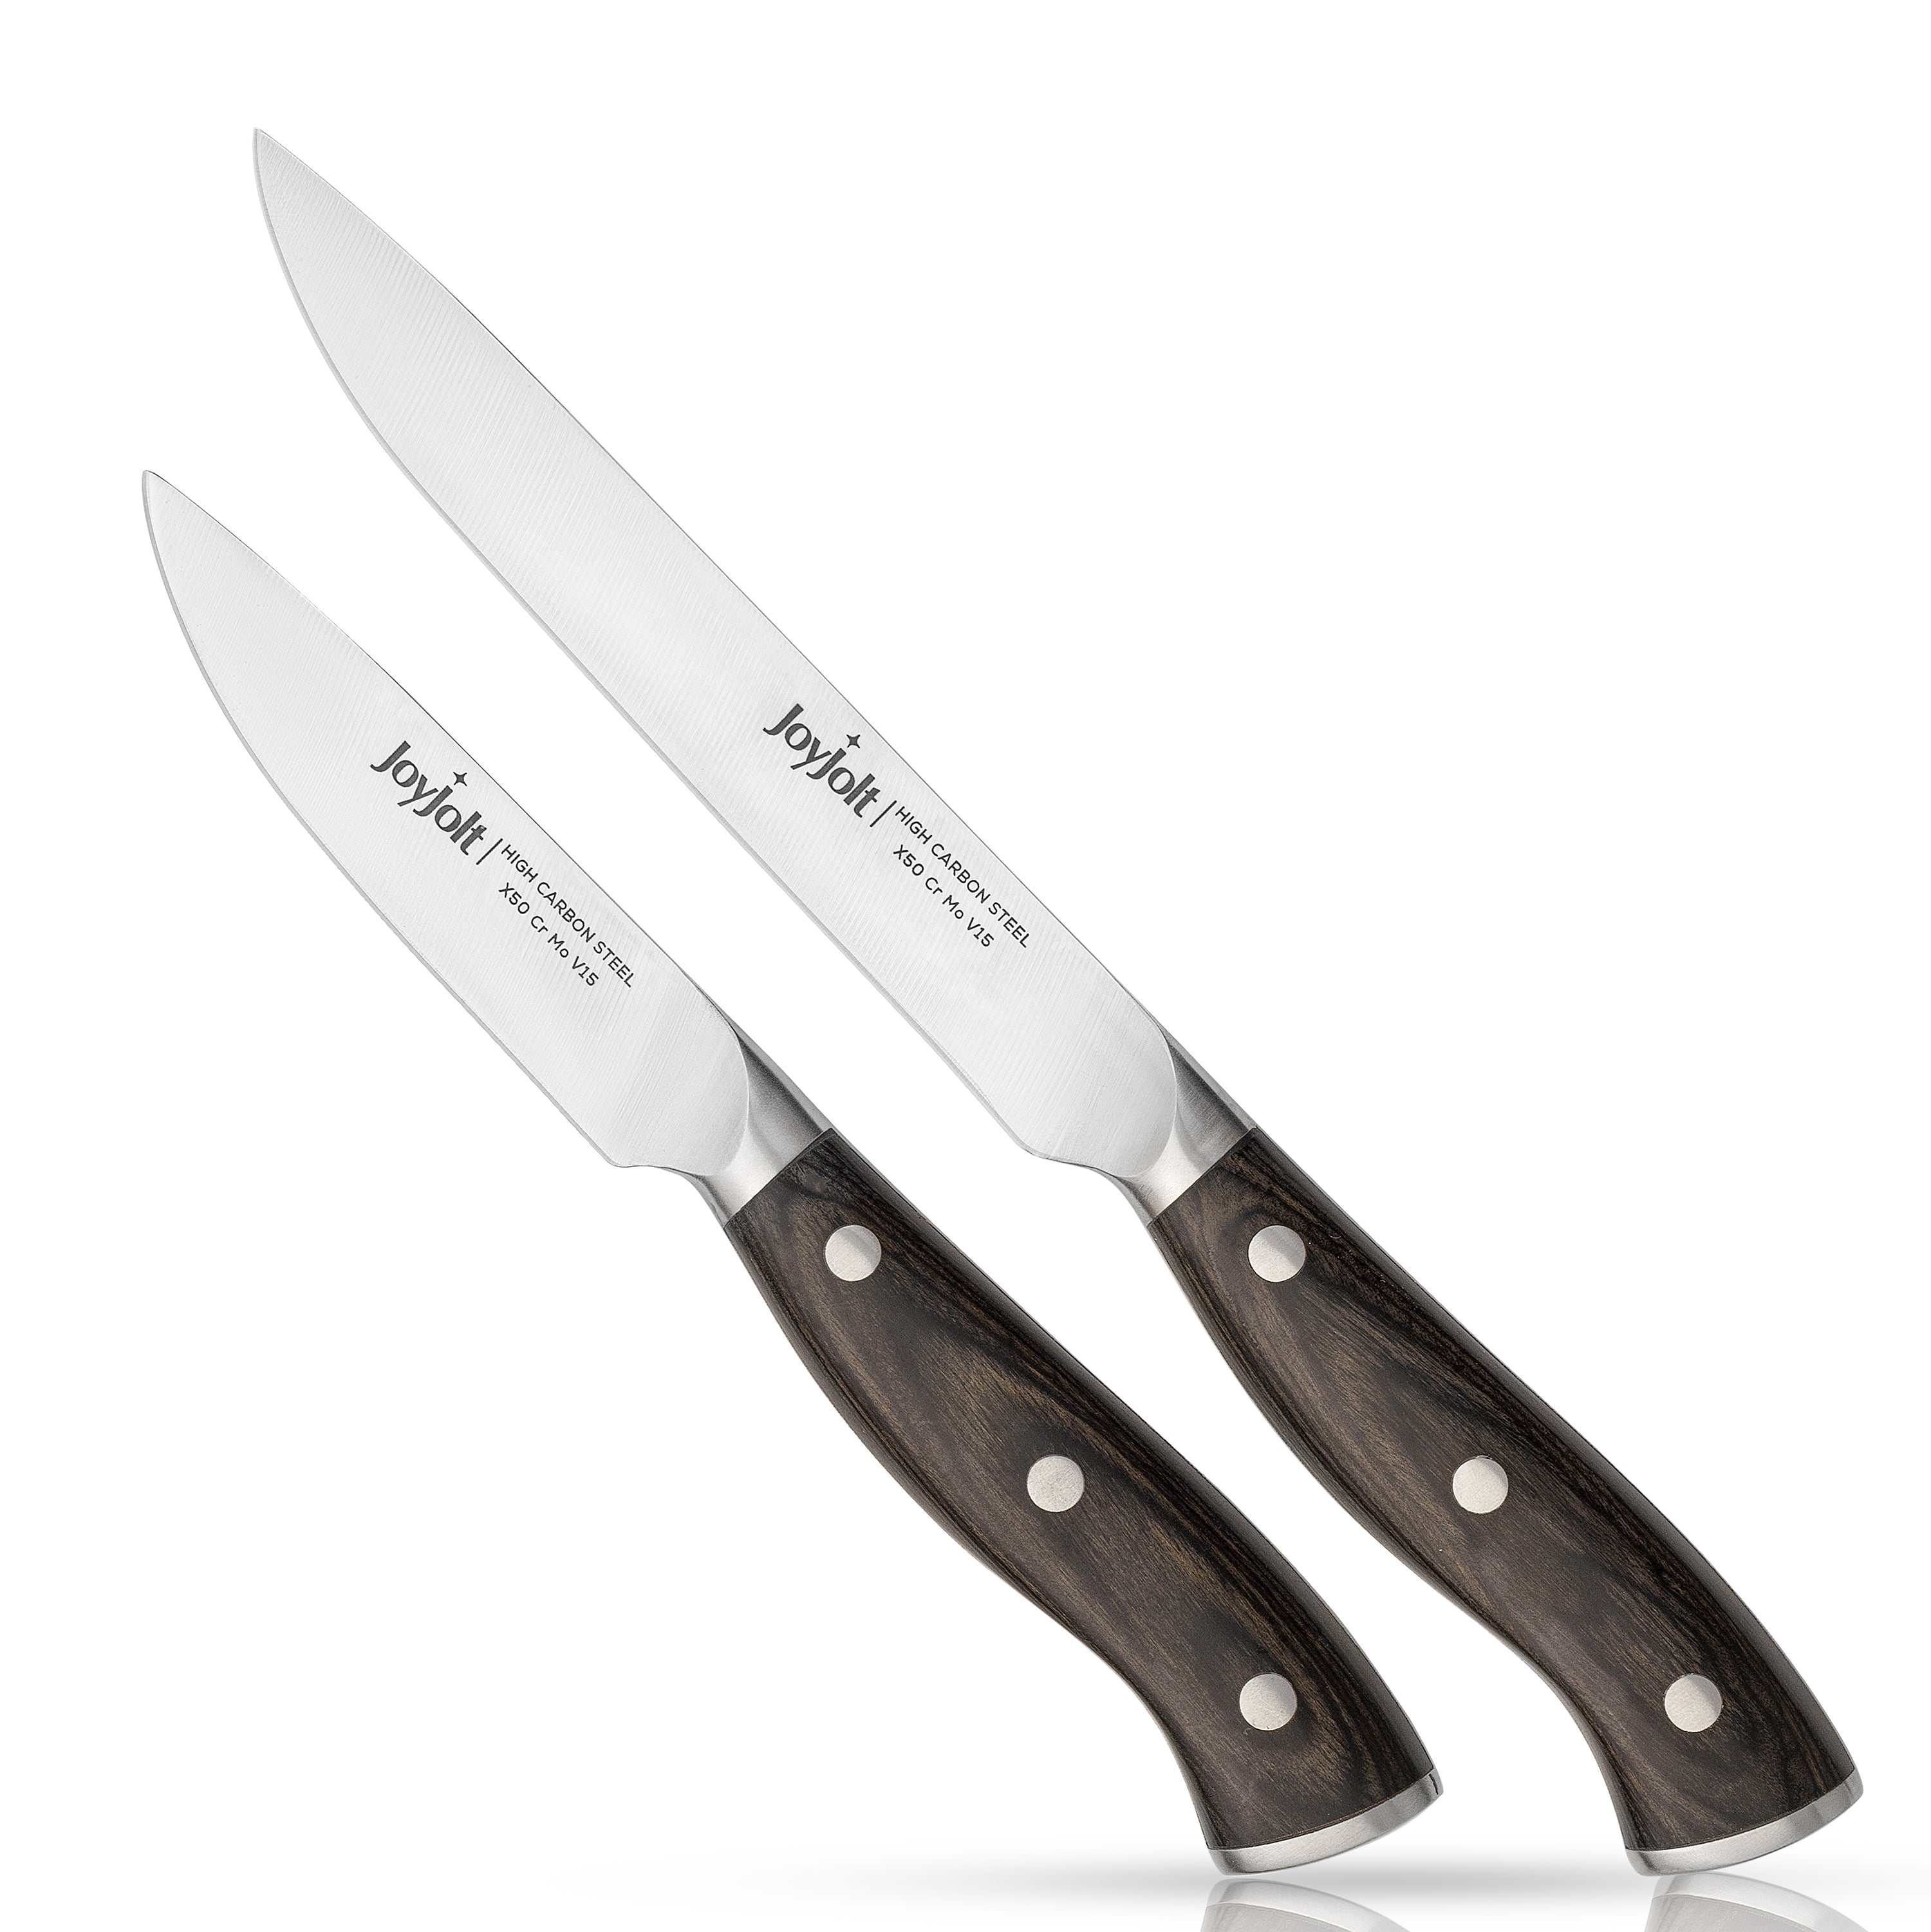 Jasni 8 inch chef's knife Set - Utility Kitchen Knife High Carbon Stai –